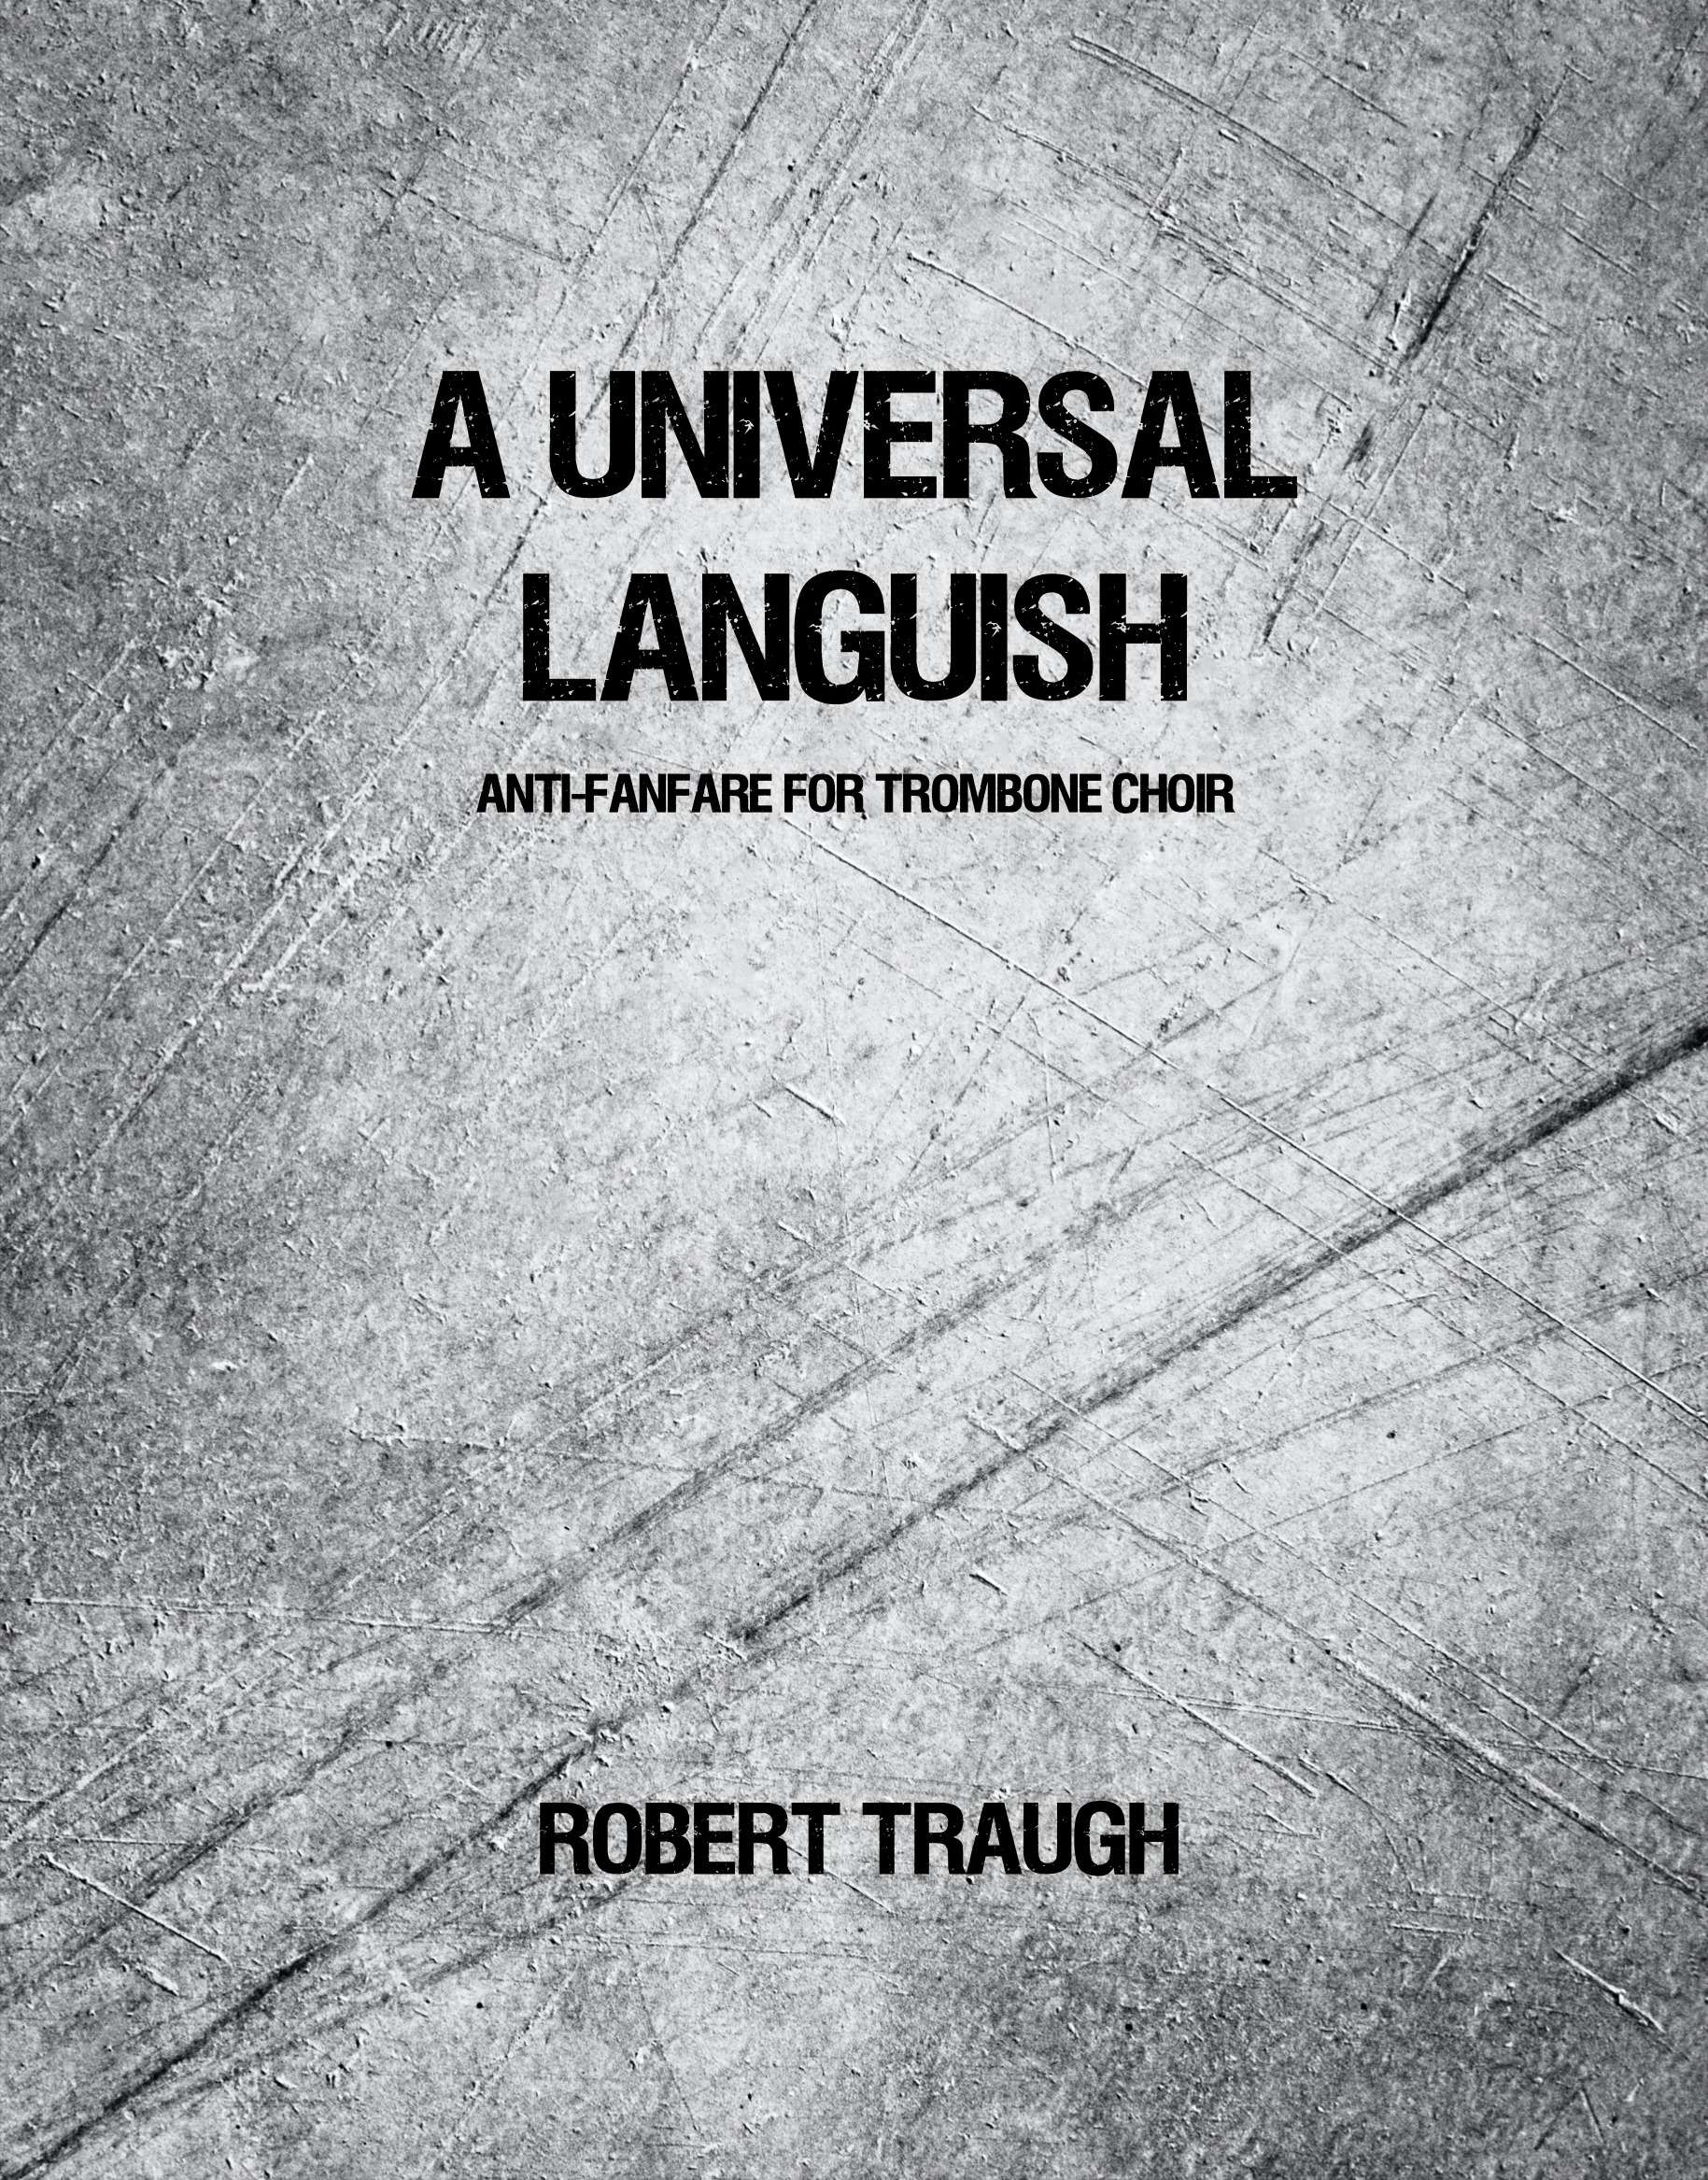 A Universal Languish  by Rob Traugh